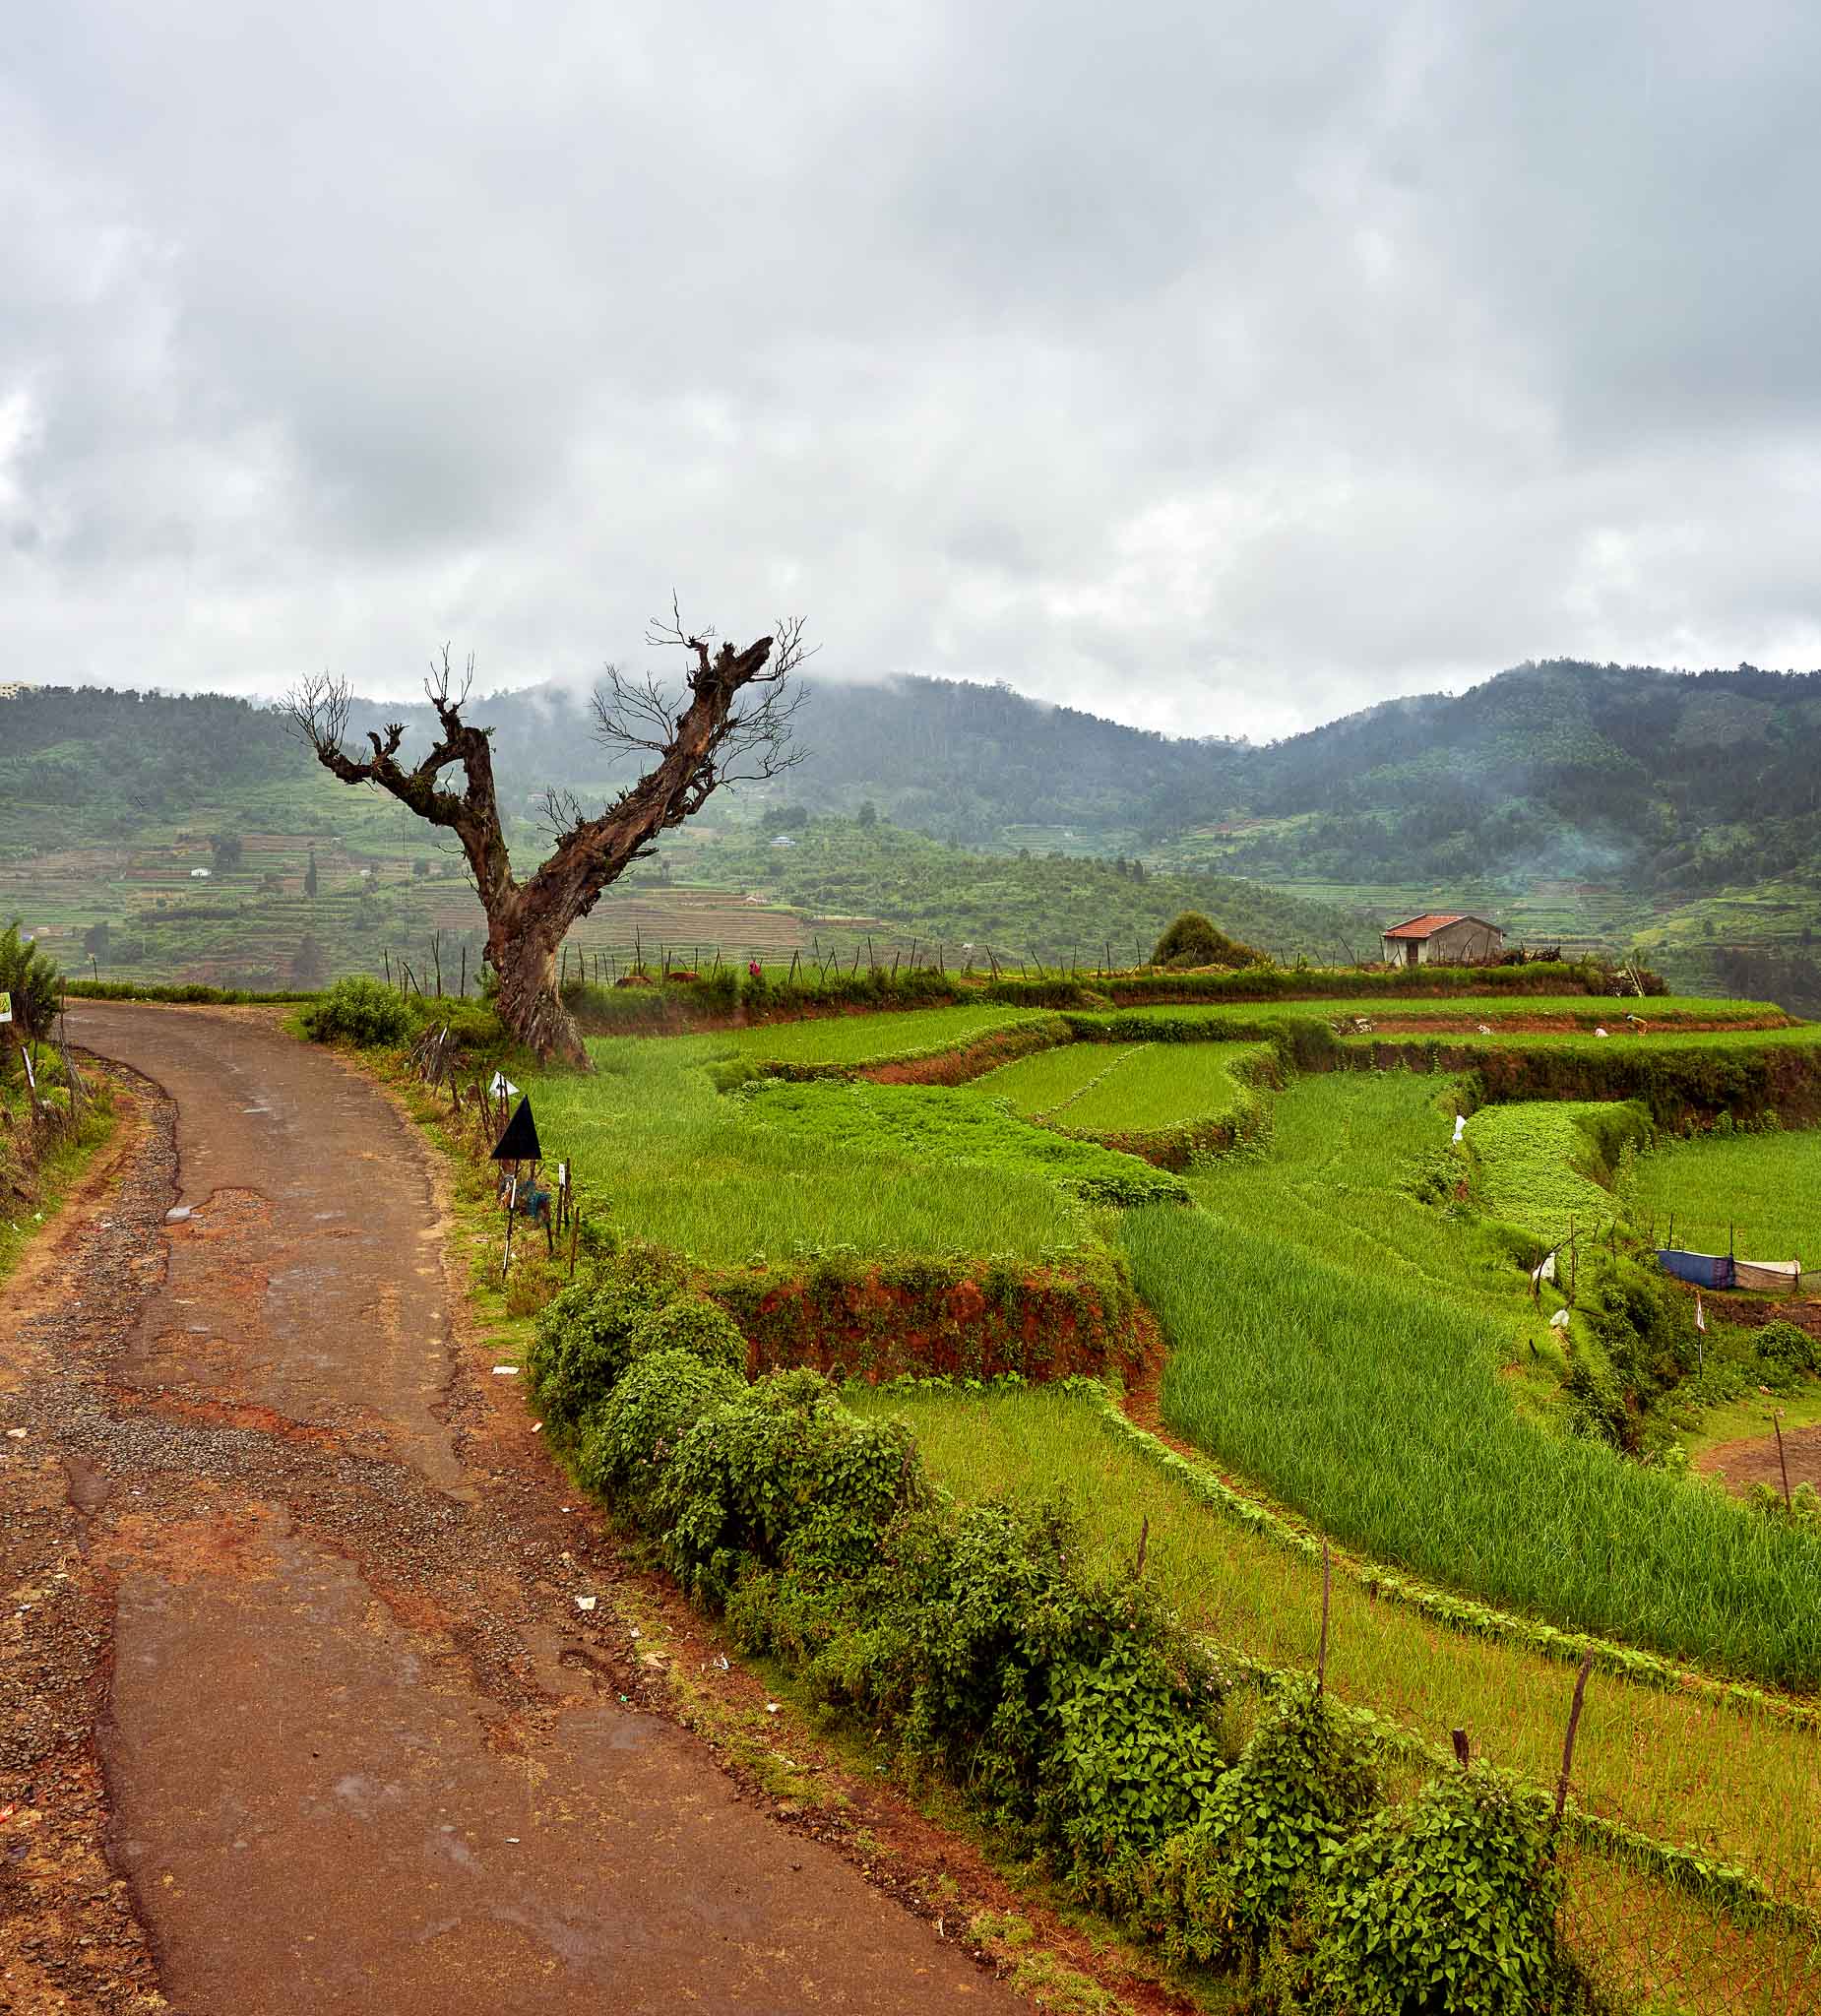 Terraced farming fields on the hillside at Poombarai near Kodaikanal, Tamil Nadu, India